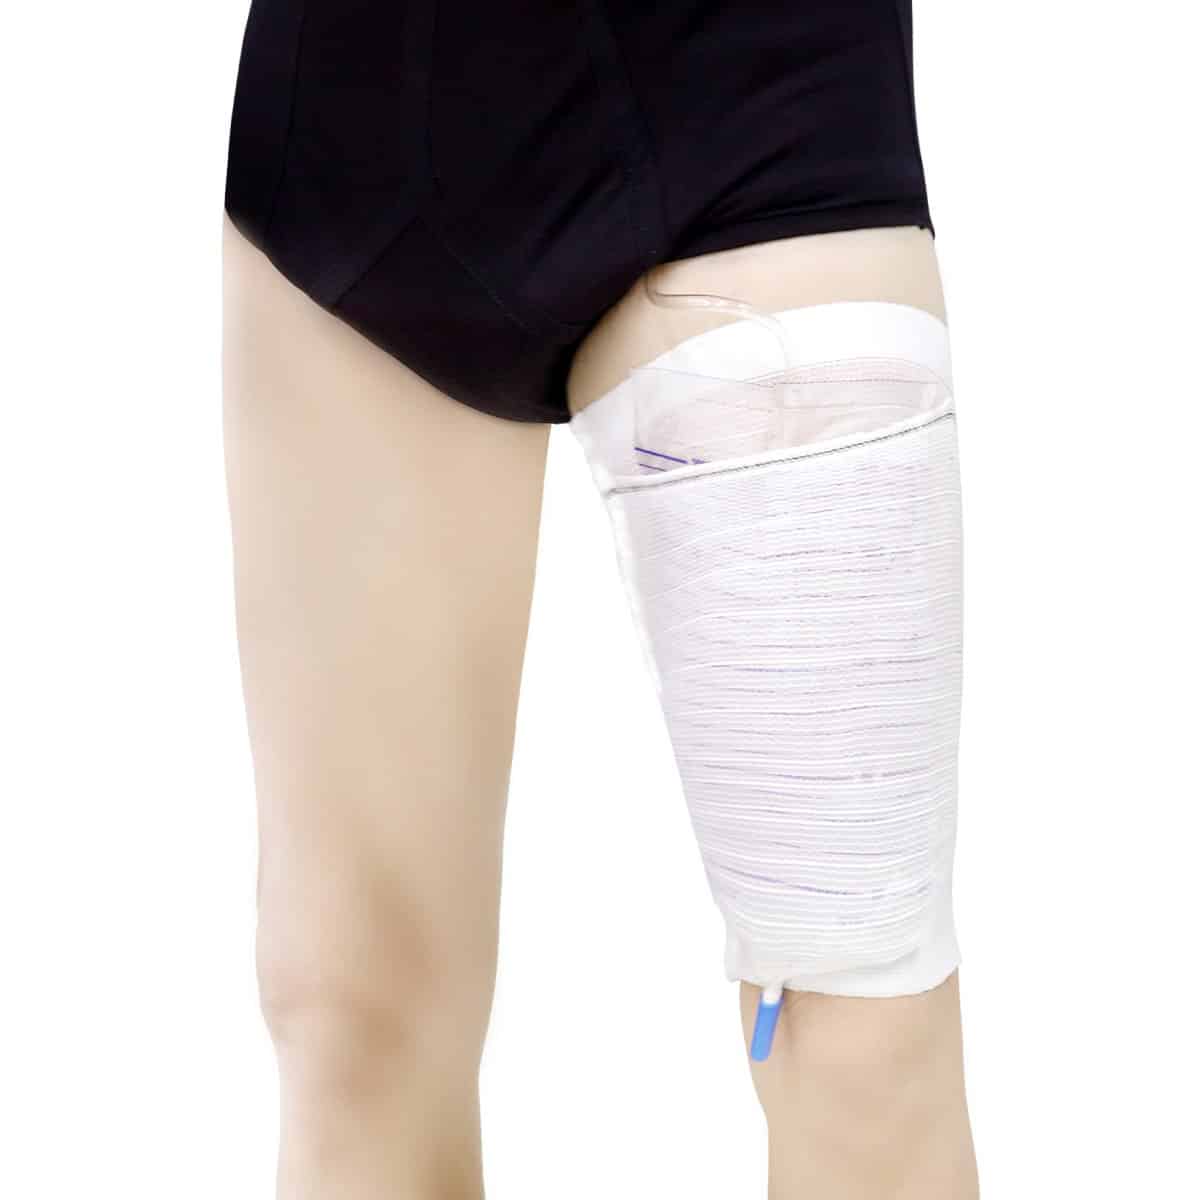 Amazon.com: Urine Leg Sleeves Urinary Drainage Catheters Bags Holders ...